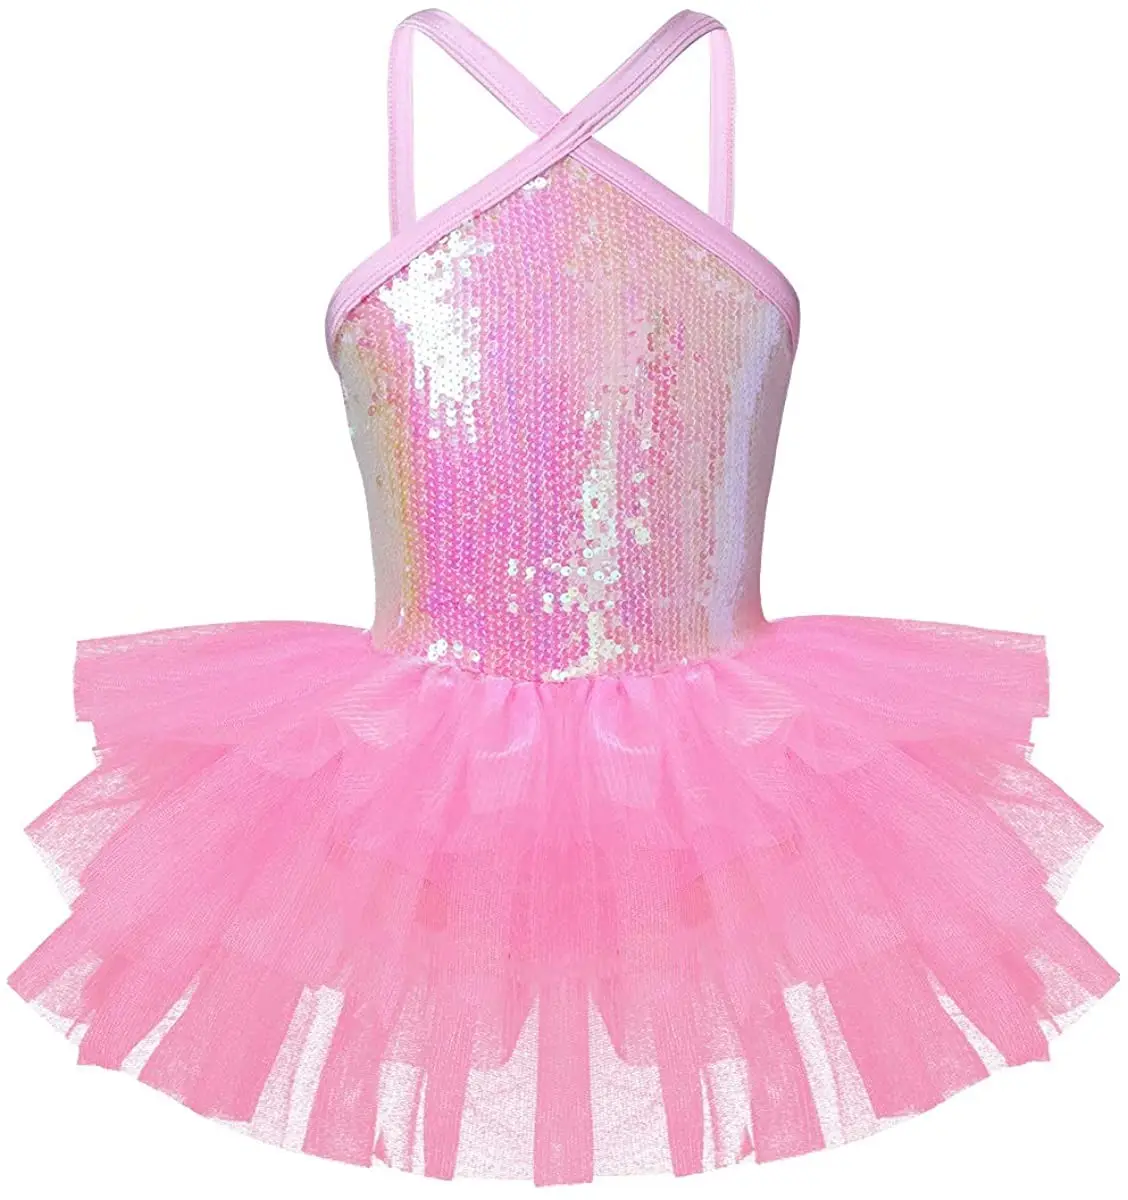 FREE SAMPLE Girls Shiny Strap Sleeveless Leotard Dance Ballet Tutu Dress Princess Ballerina Fancy Party Dress up Costume